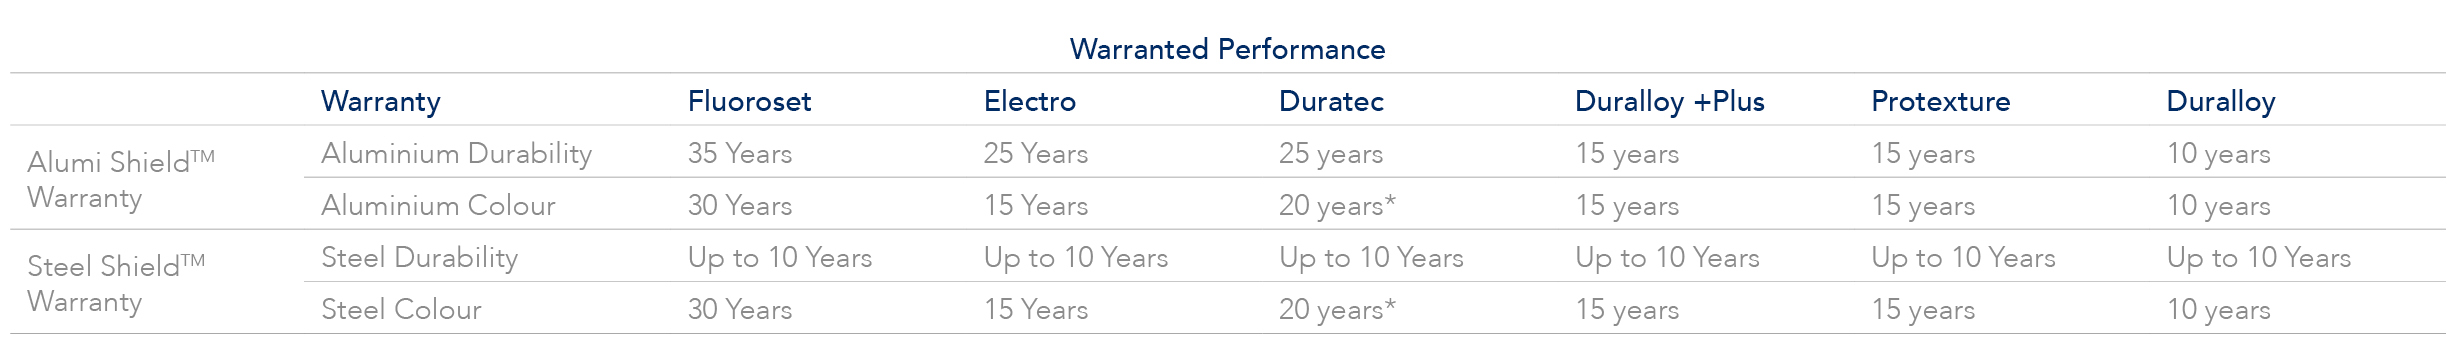 Warranty Performance